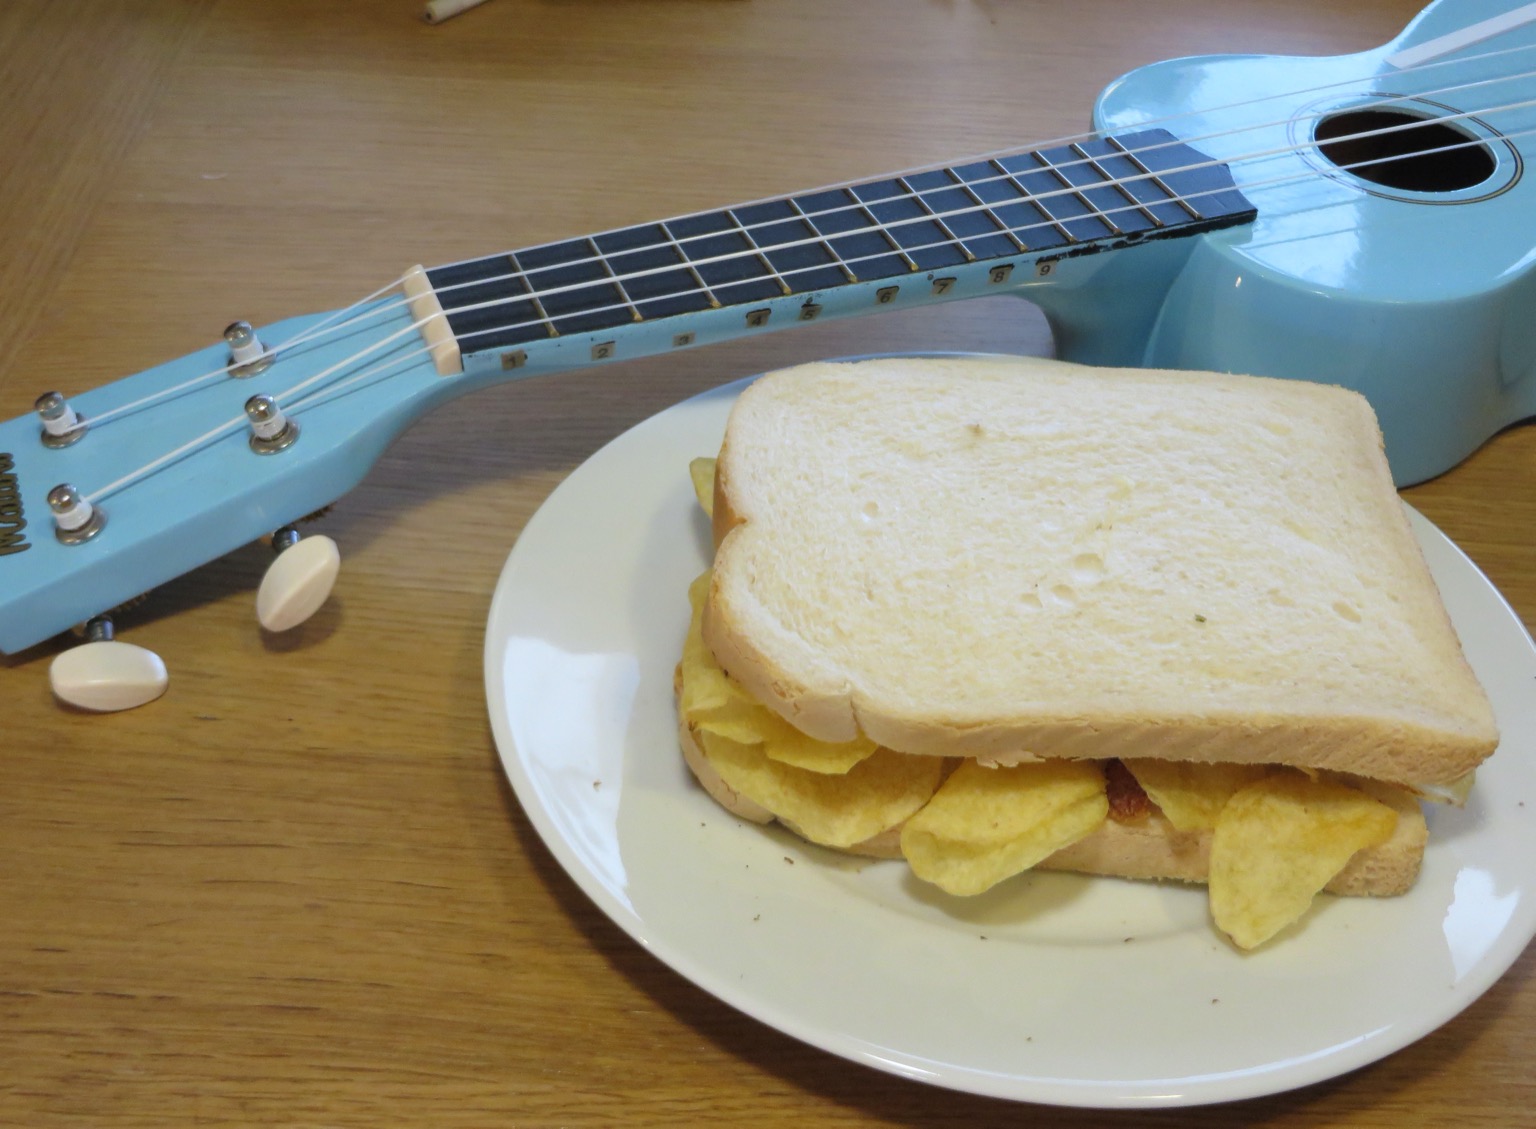 Crisp-filled white sandwich alongside a blue ukulele